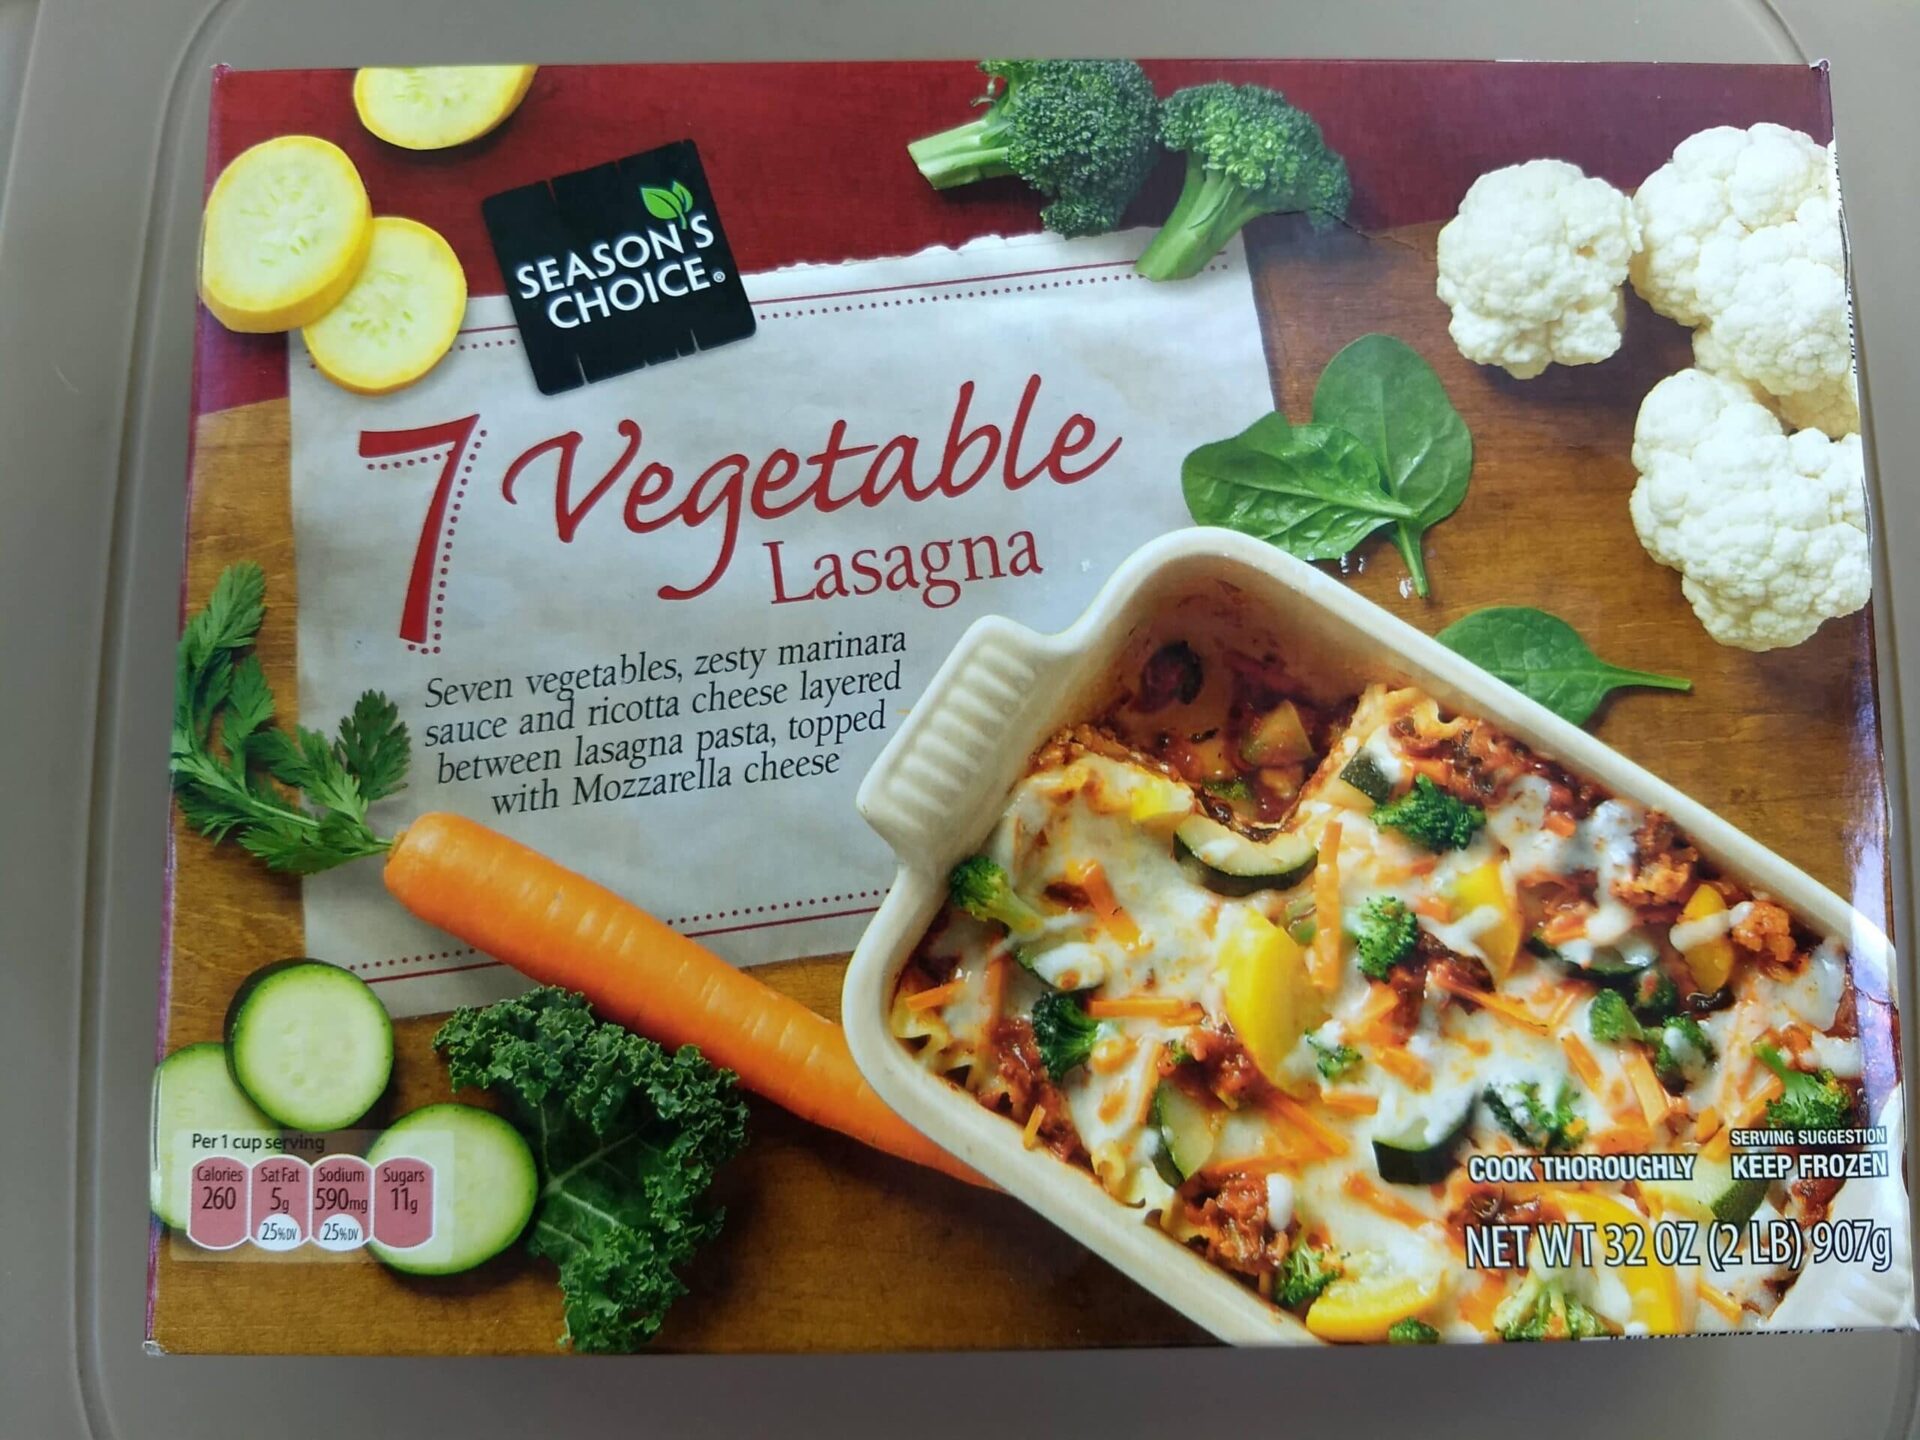 Season's Choice 7 Vegetable Lasagna (Priano Vegetable Lasagna) | ALDI  REVIEWER